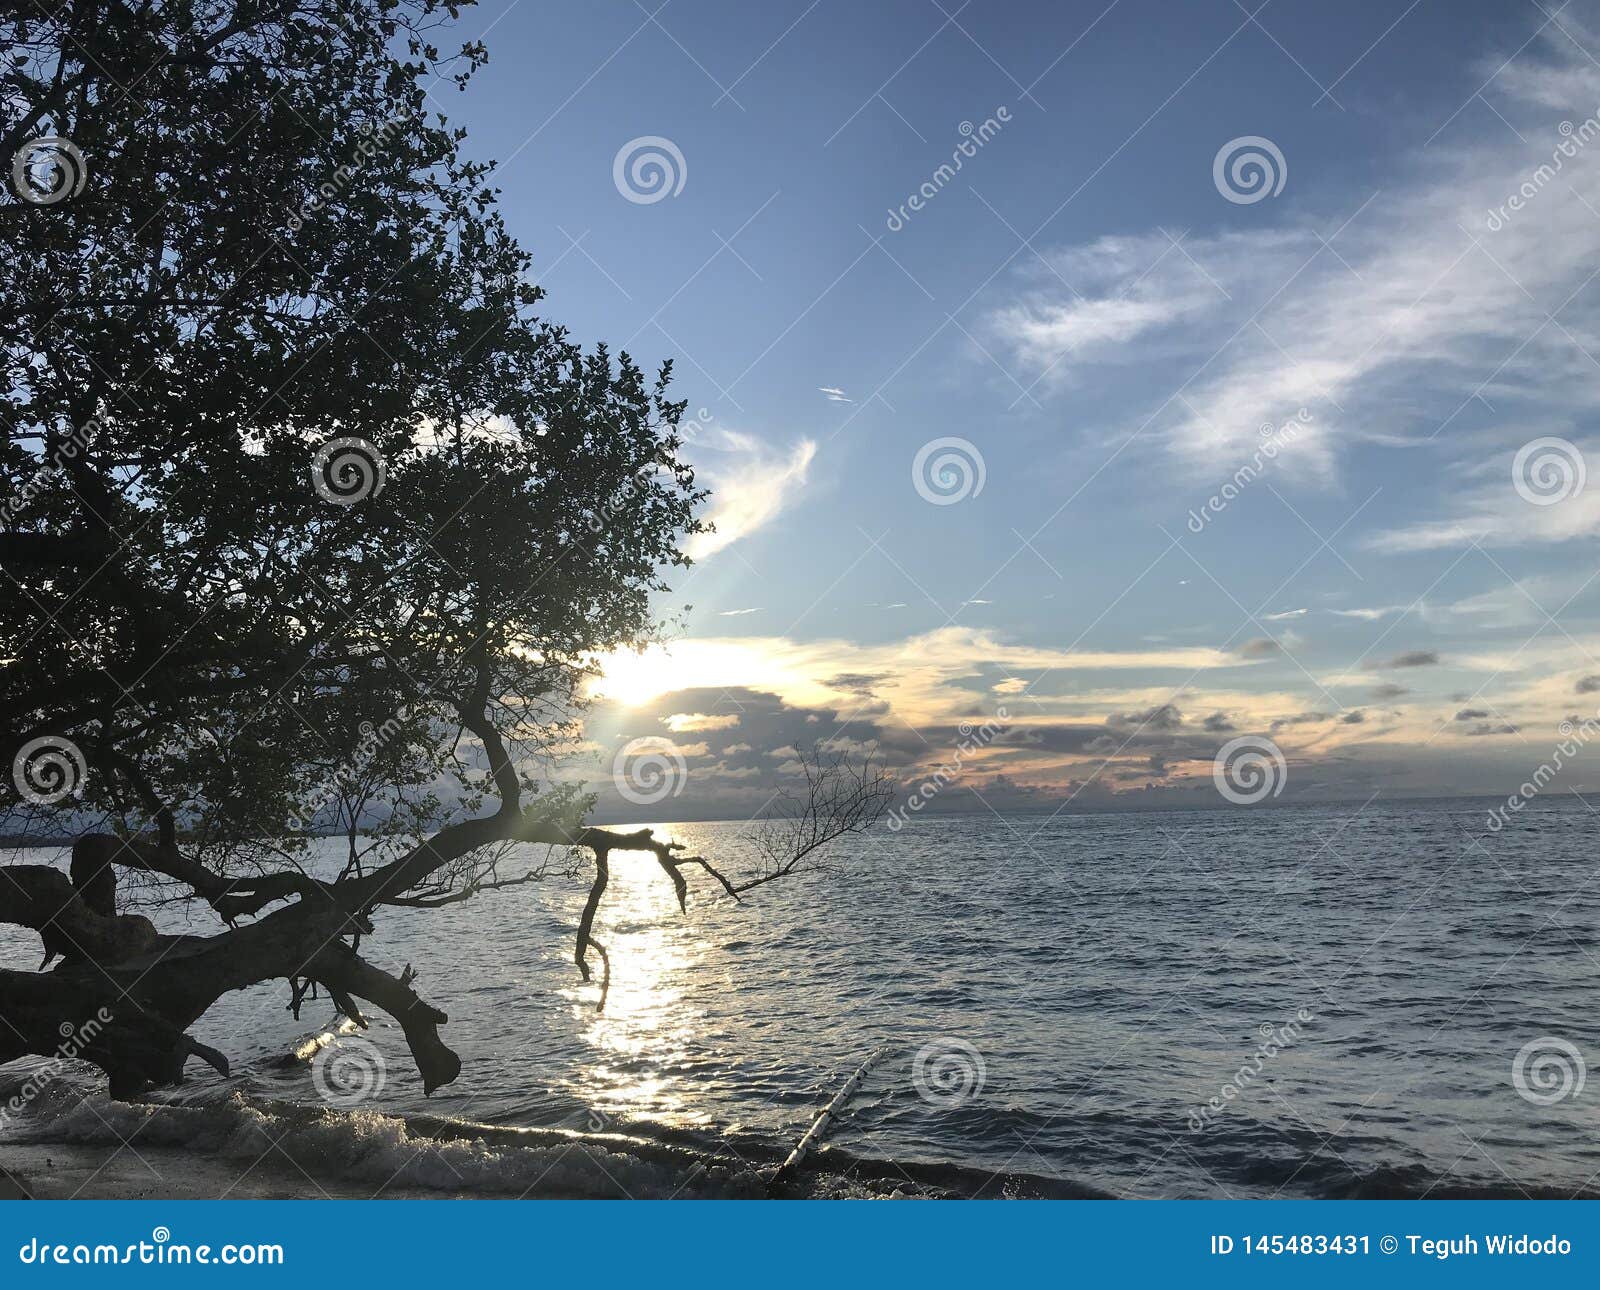 Sunset Di Pantai Kalibobo Nabire Stock Image Image Of Water